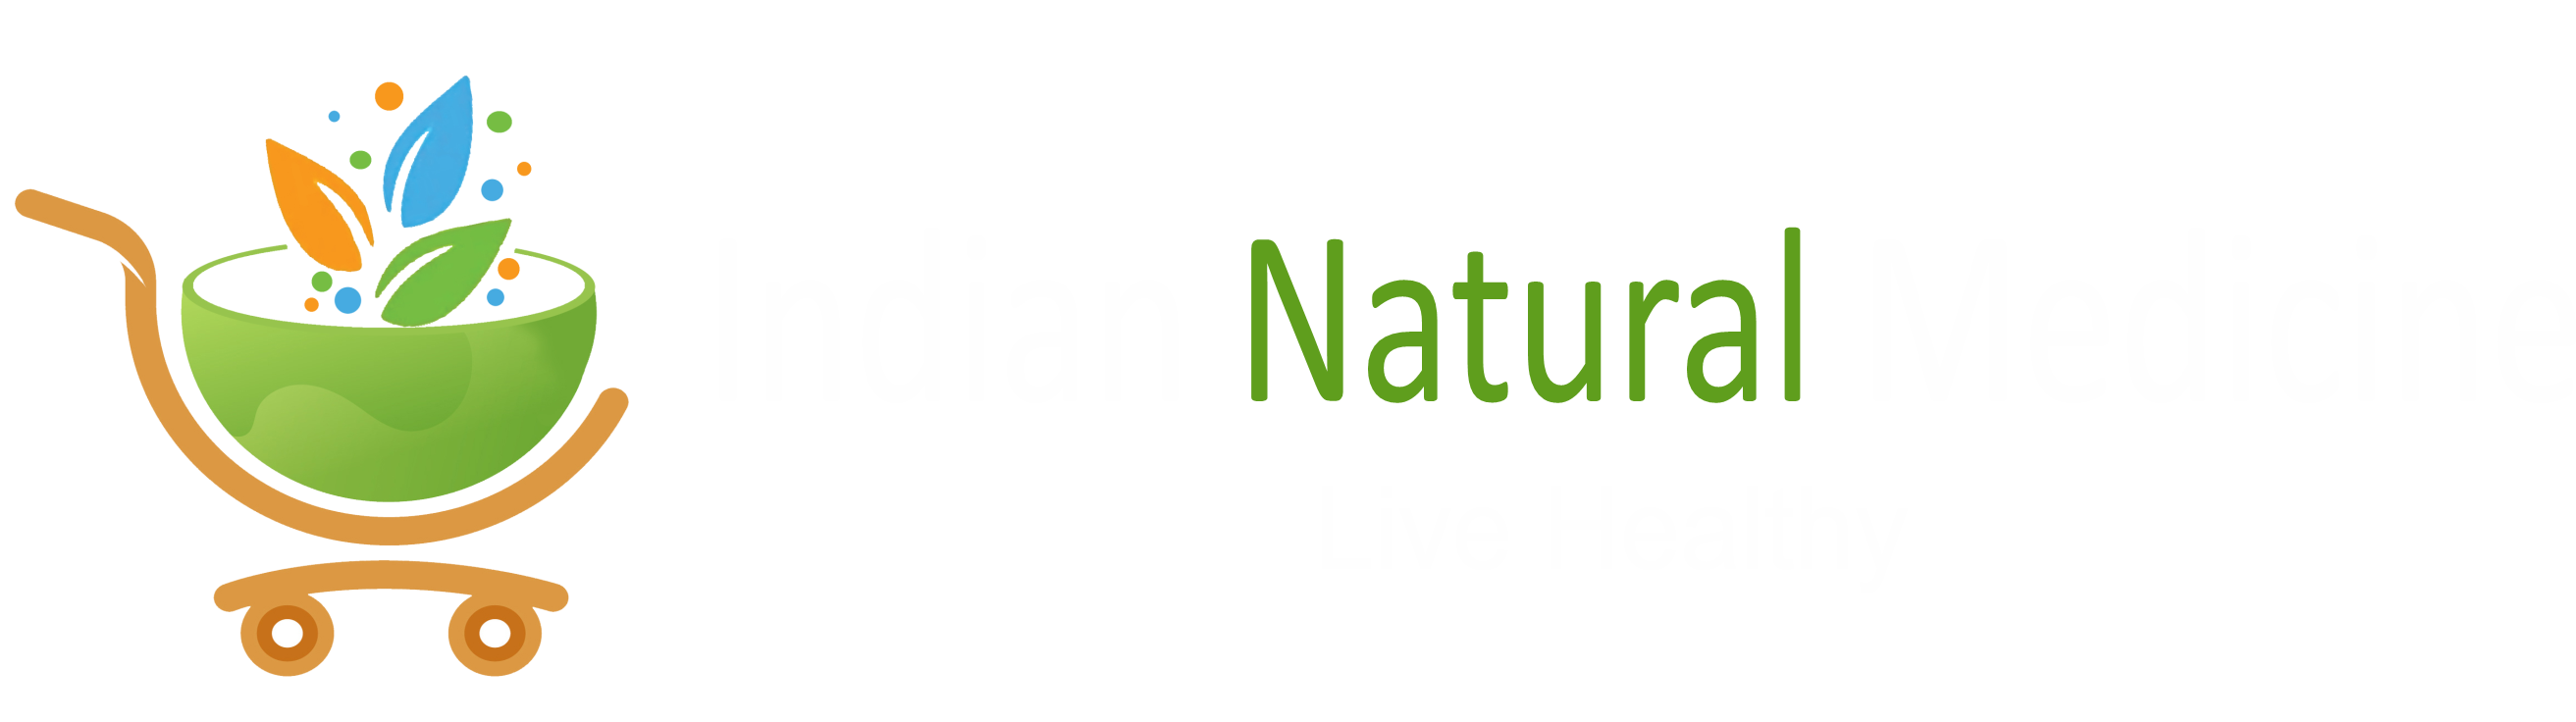 Indian Natural Medicine